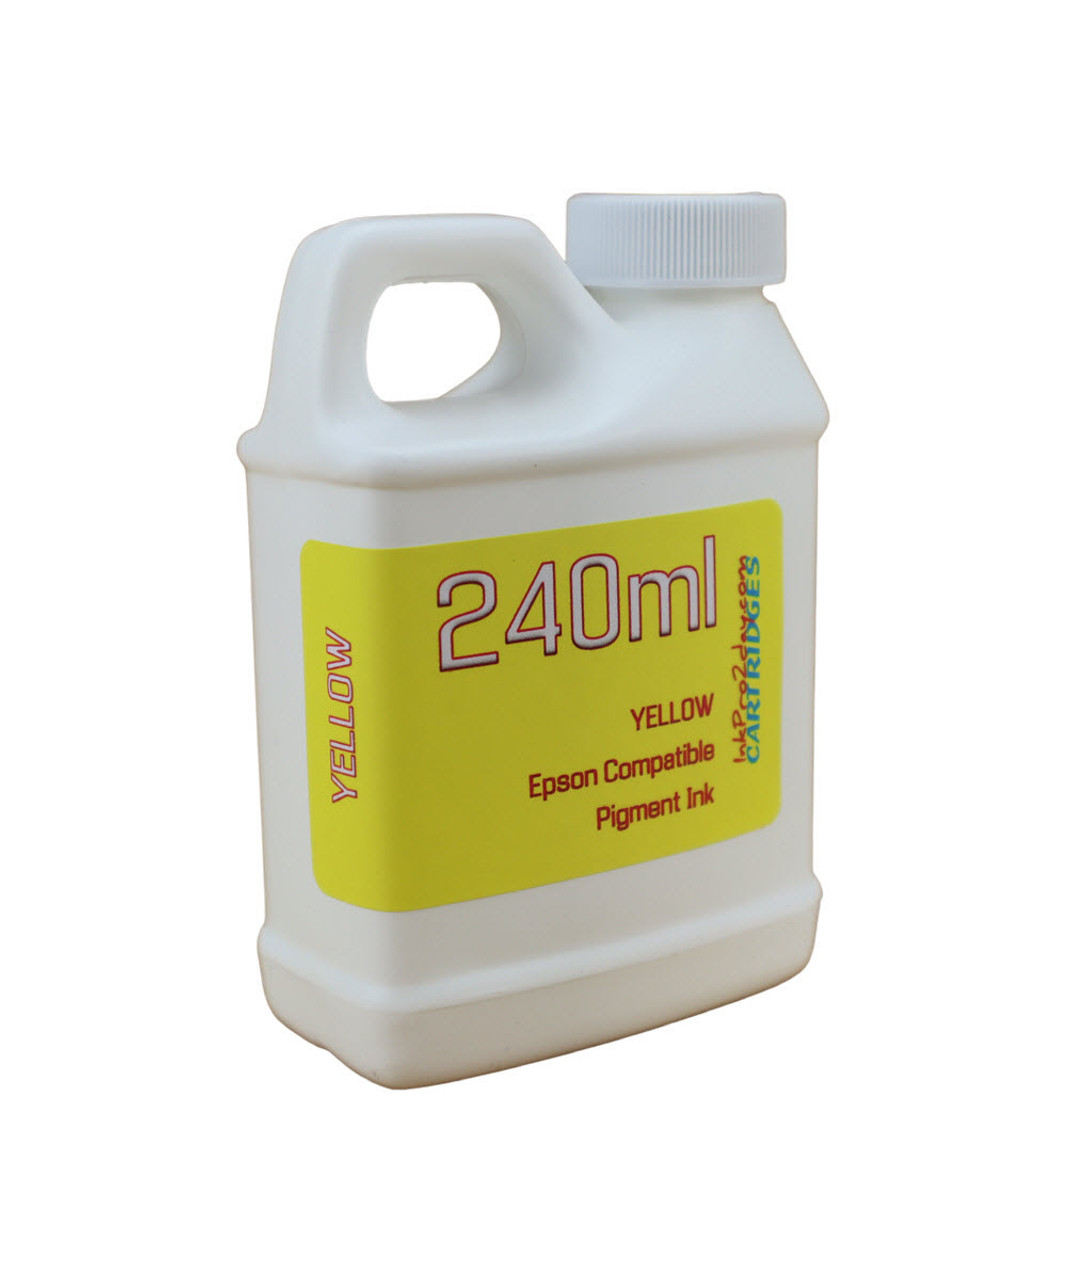 Yellow Pigment Ink 240ml Bottle for Epson EcoTank ET-16600 ET-16650 Printers